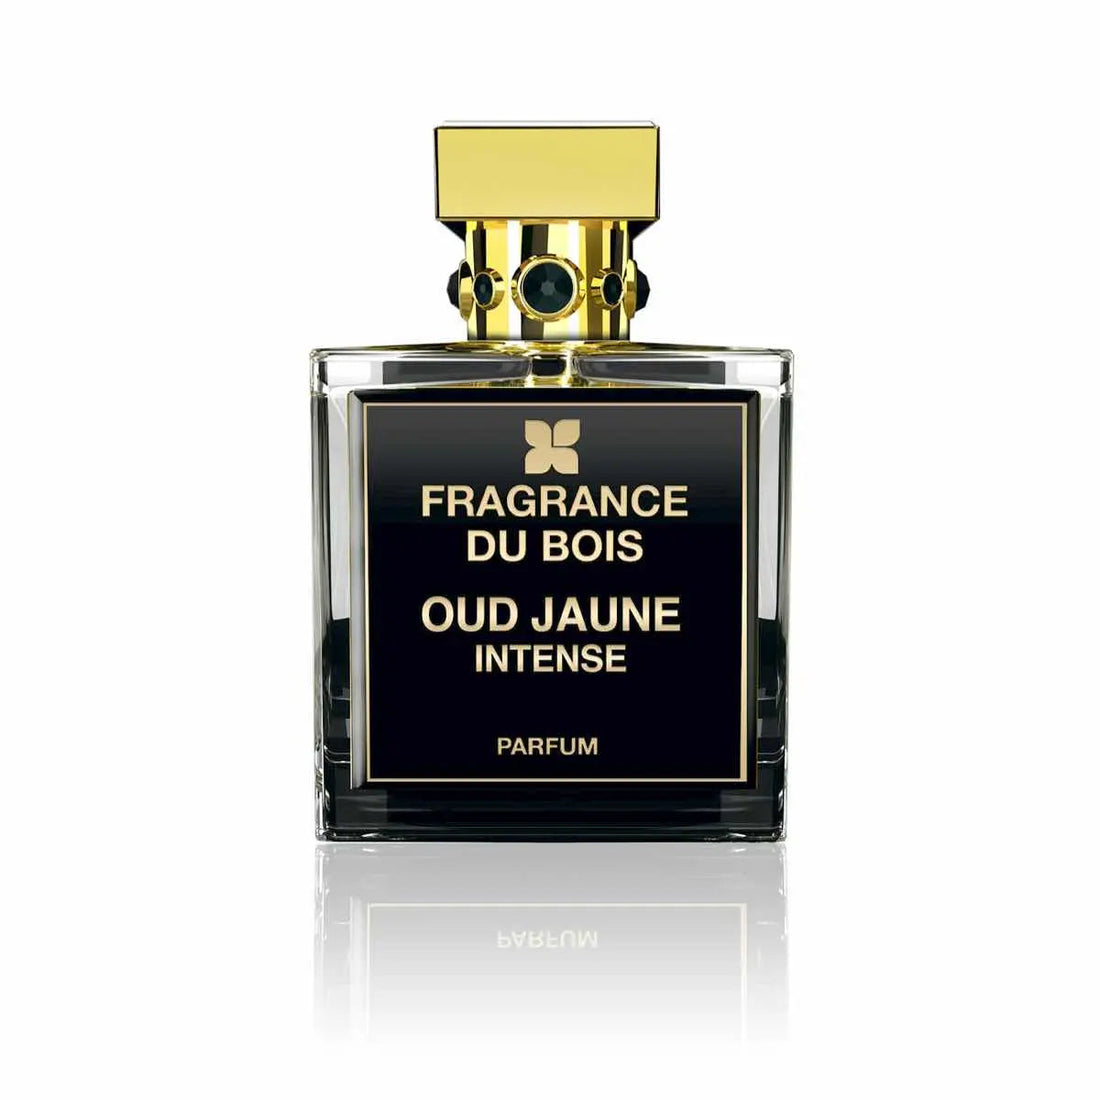 Perfume Fragrance du bois Oud Jaune - 50 ml